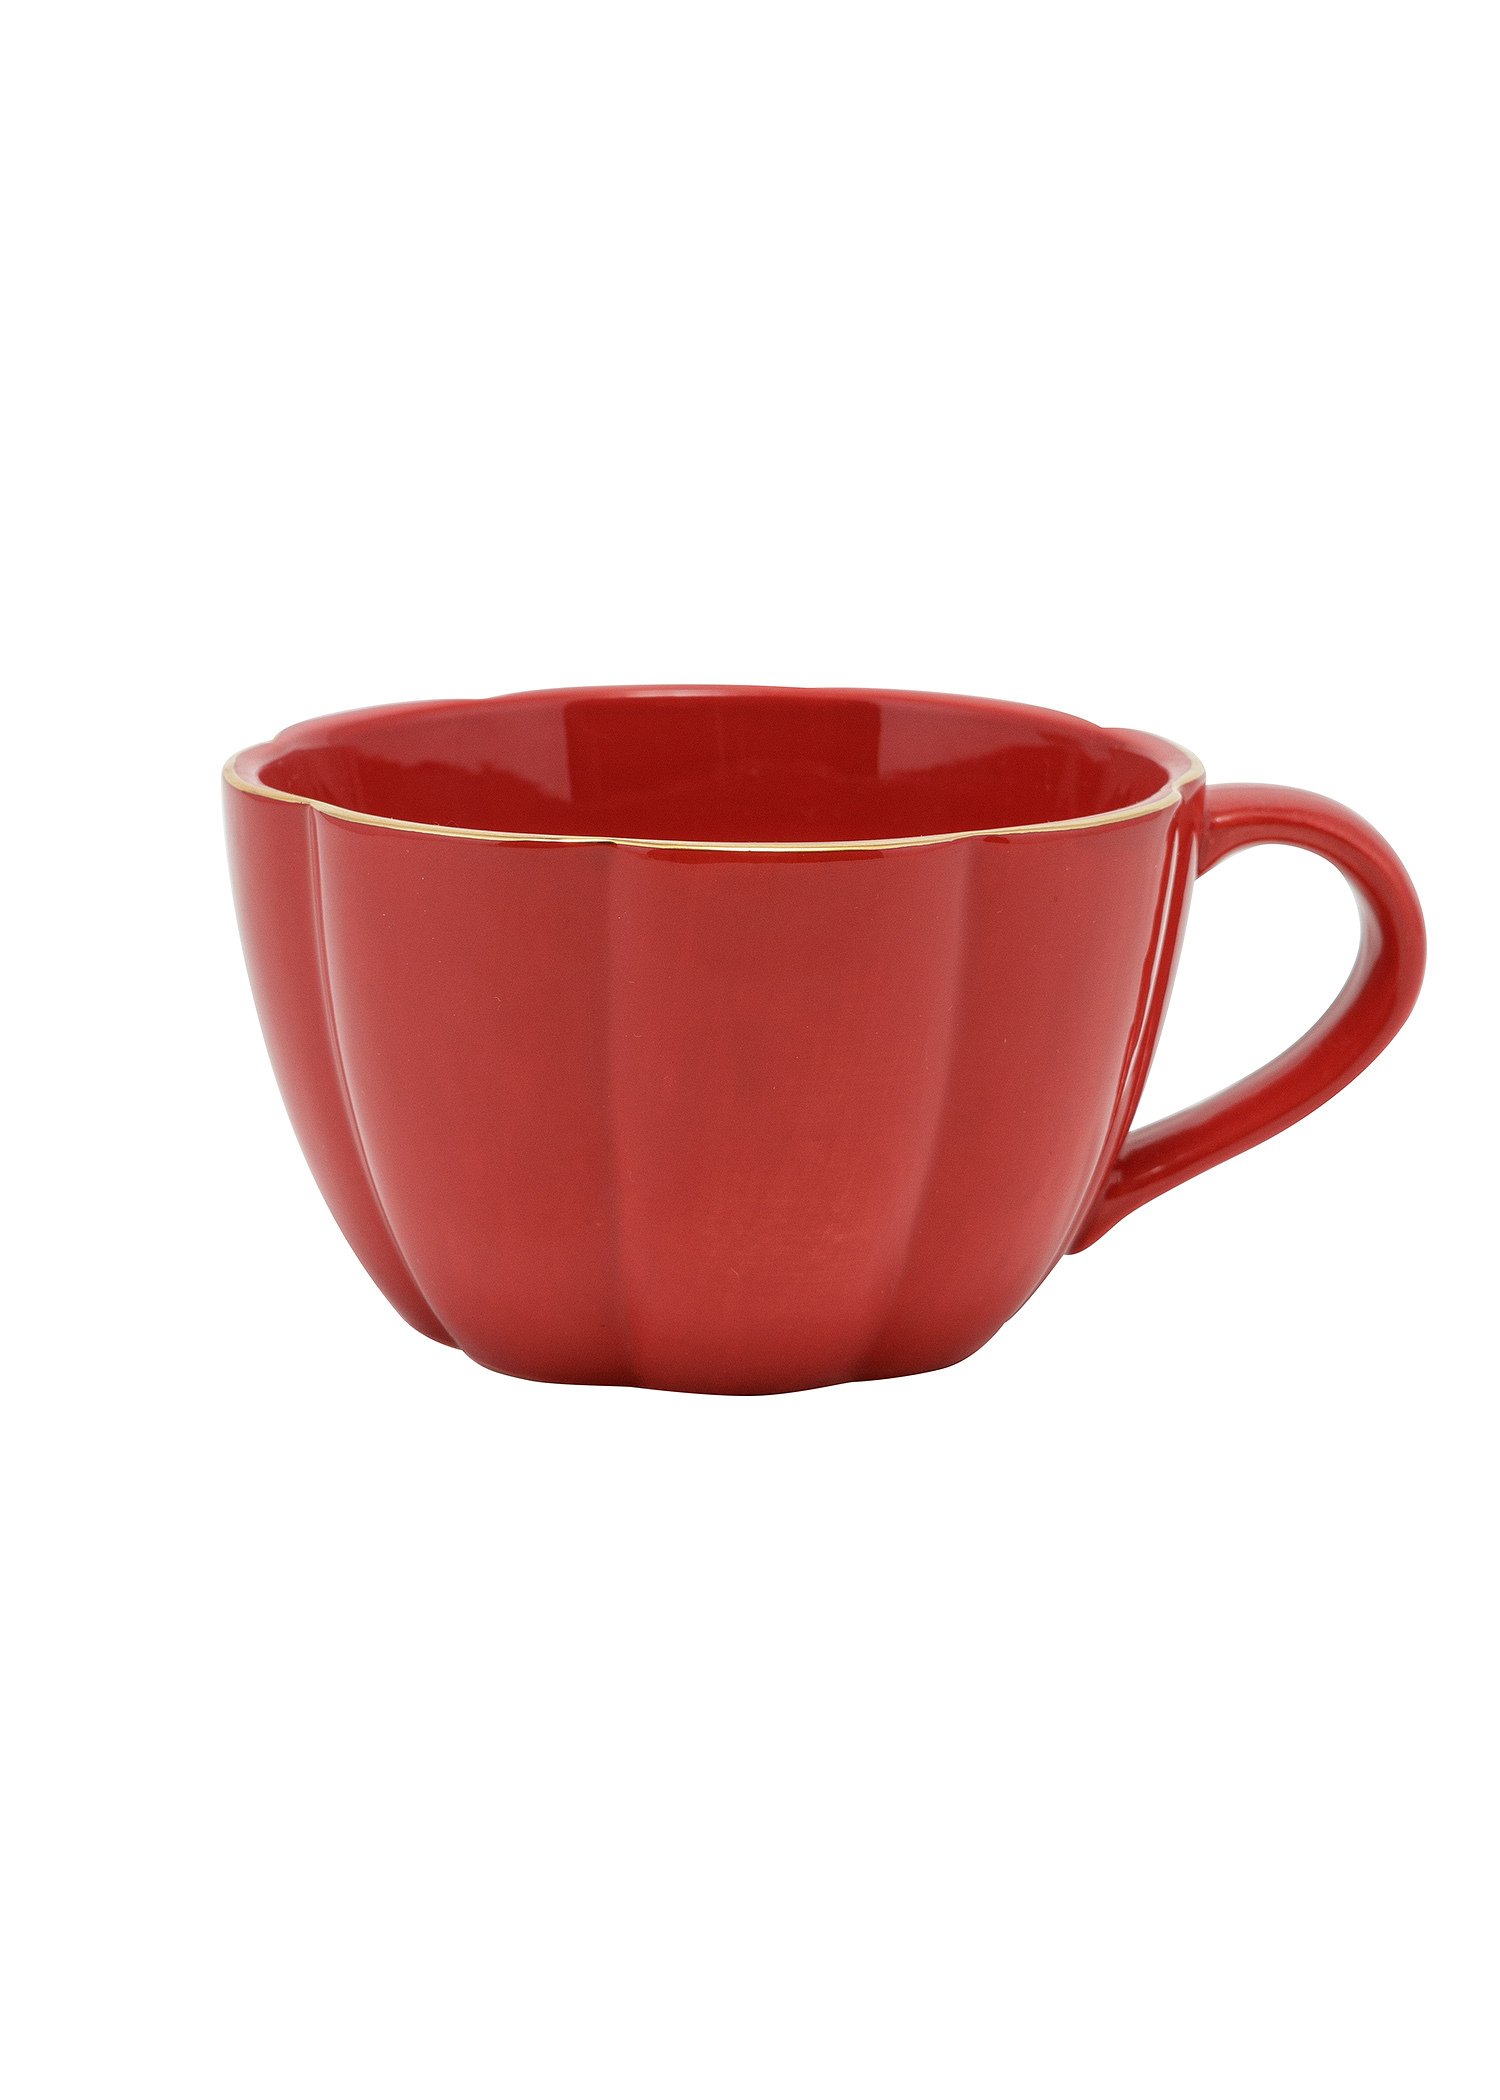 Mug with gold coloured rim